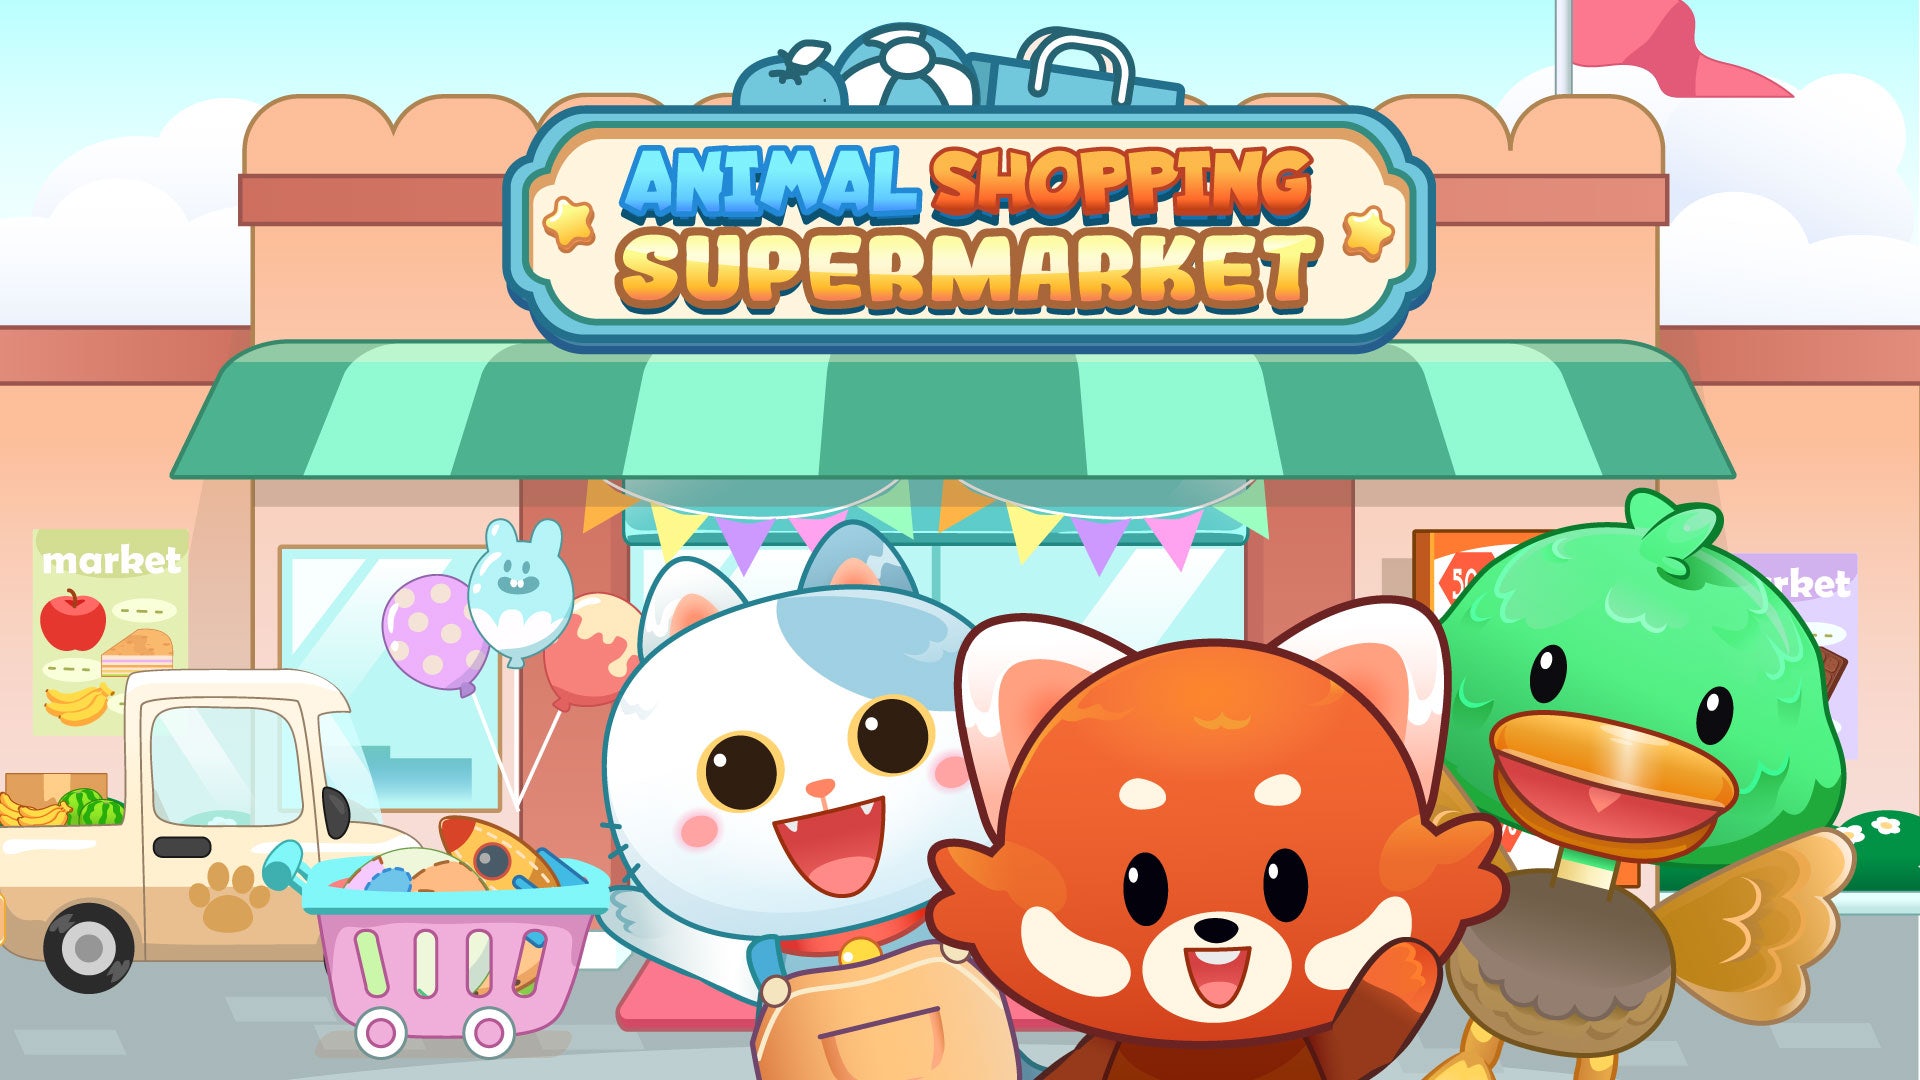 Animal Shopping Supermarket